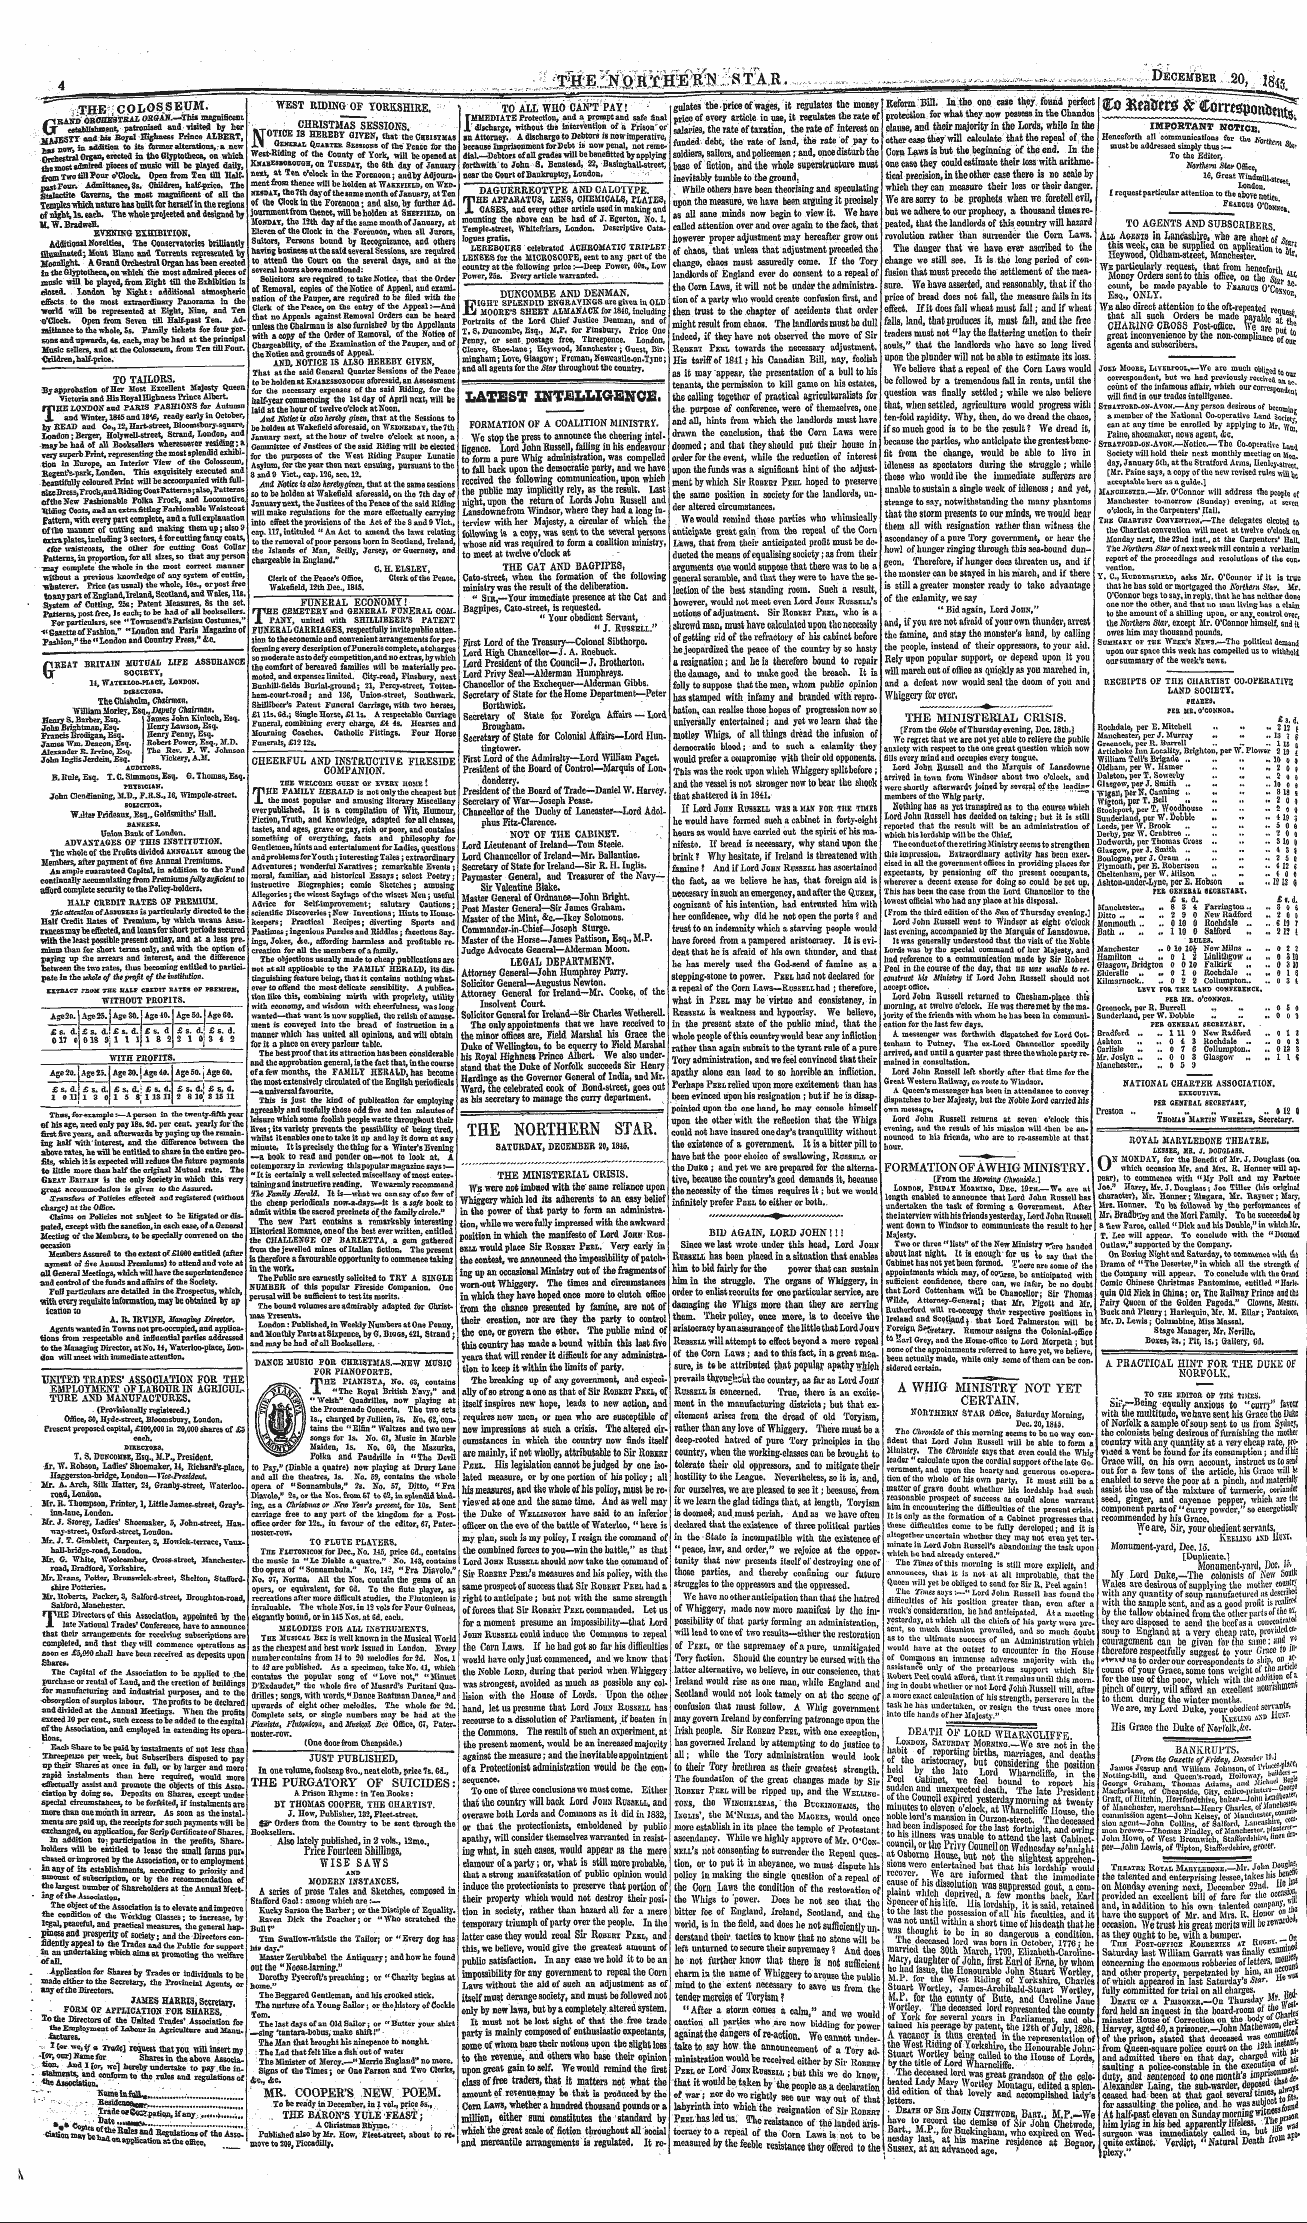 Northern Star (1837-1852): jS F Y, 4th edition - Ad00426